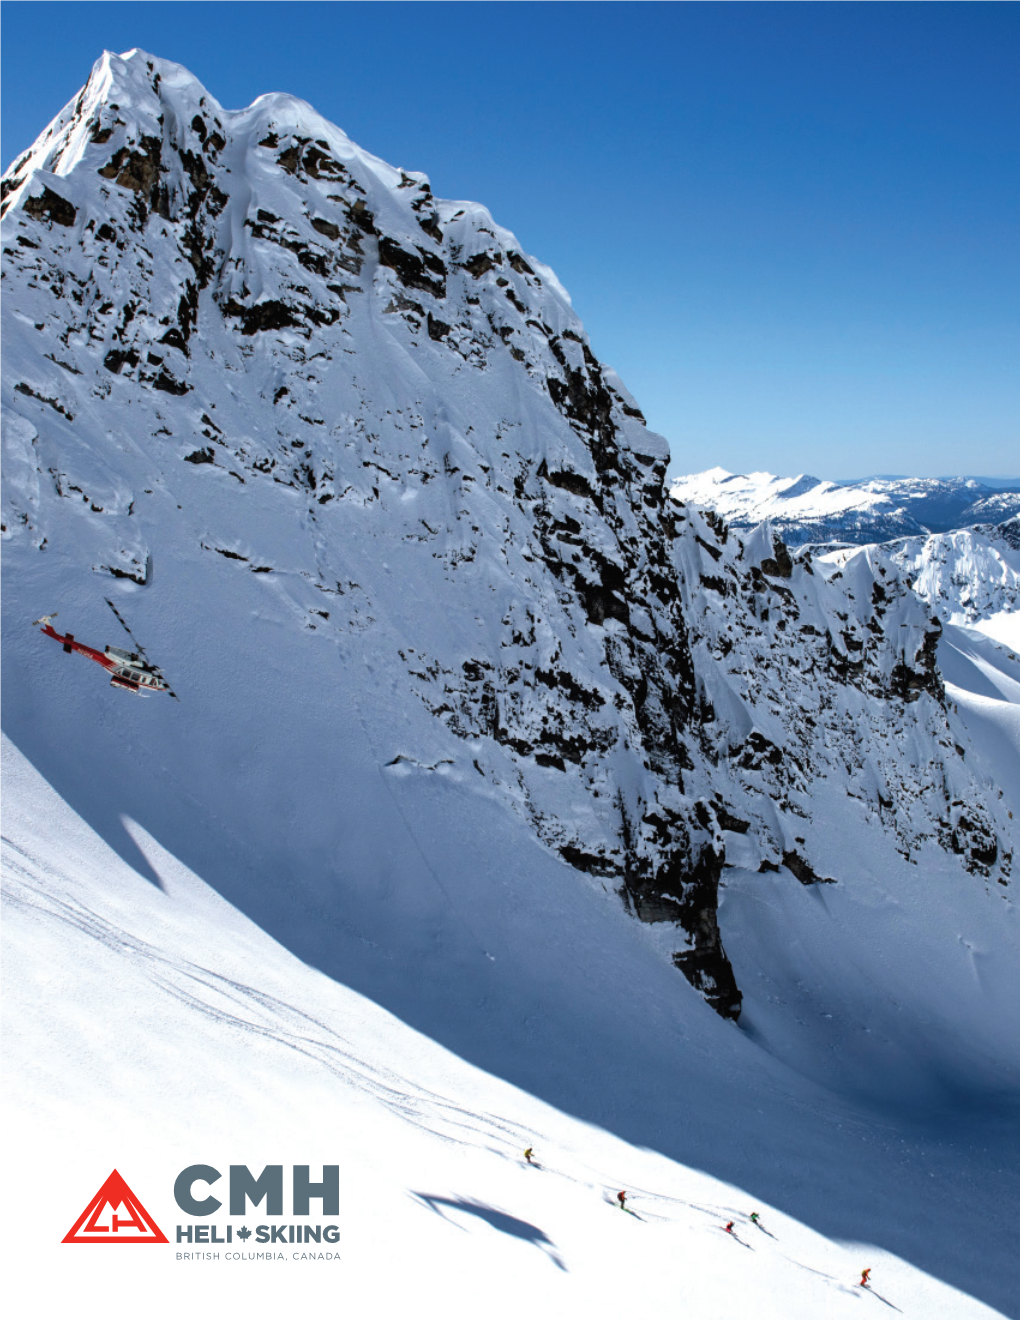 Heli-Skiing 1 | Cmh Heli-Skiing 1 12 Unique Lodges, the World’S Greatest Skiing